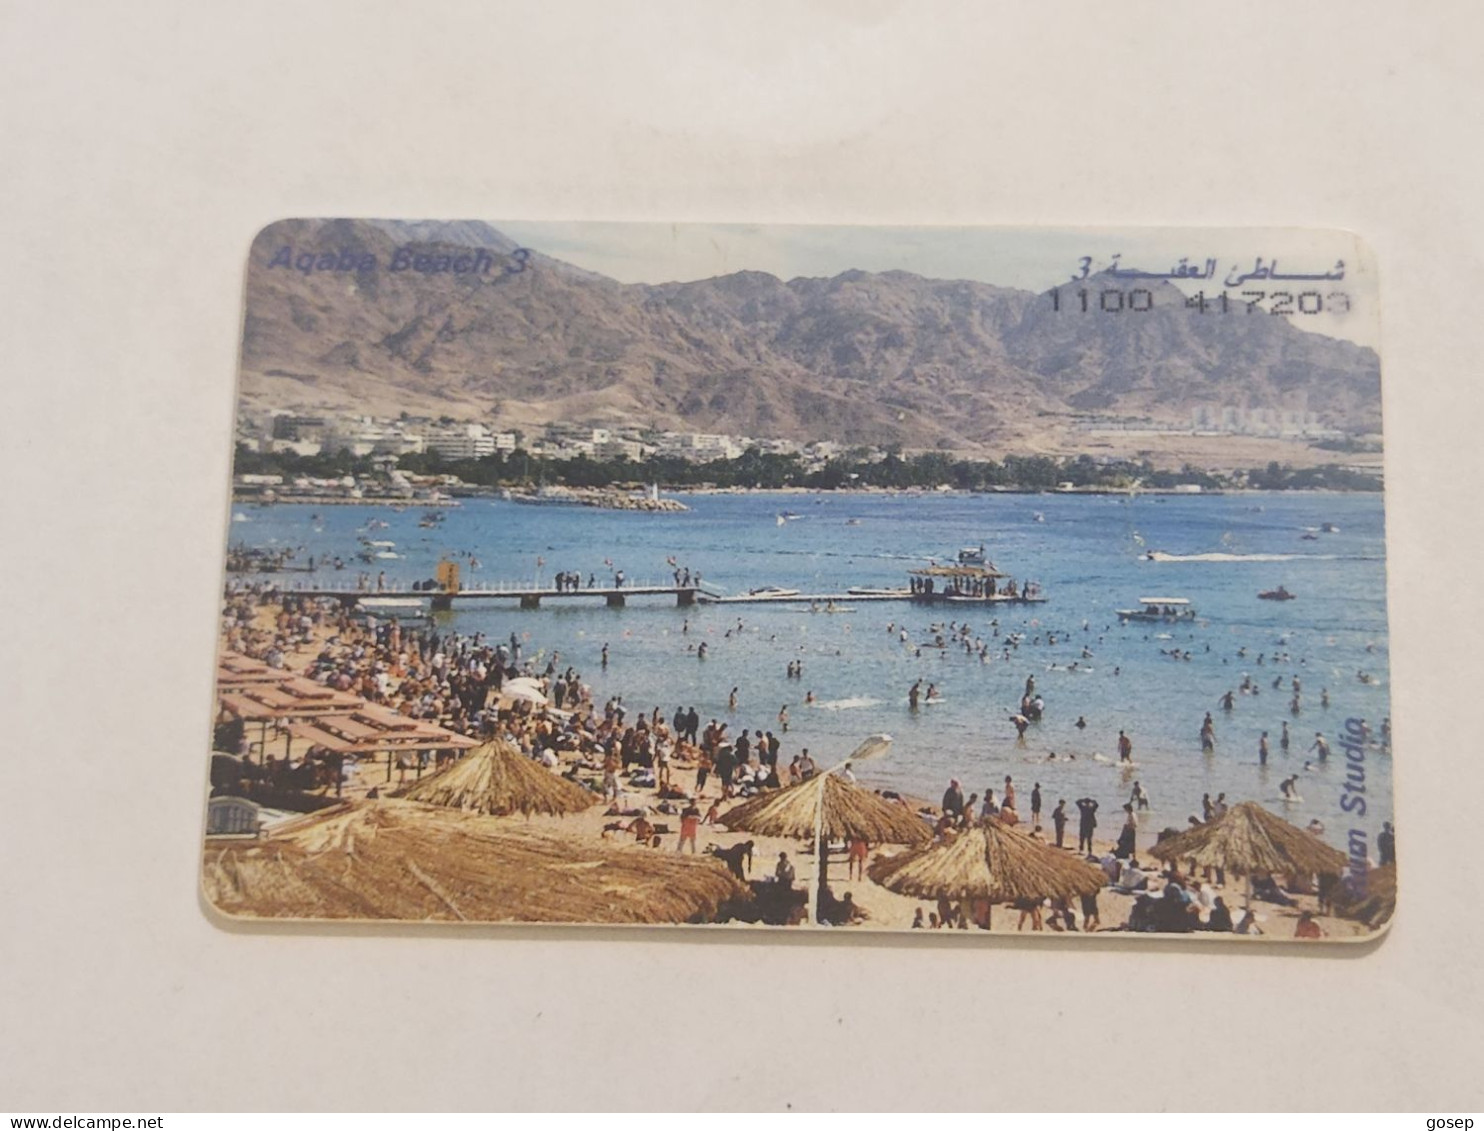 JORDAN-(JO-ALO-0027)-Aqaba Beach-(121)-(1100-417203)-(3JD)-(9/2000)-used Card+1card Prepiad Free - Jordanie